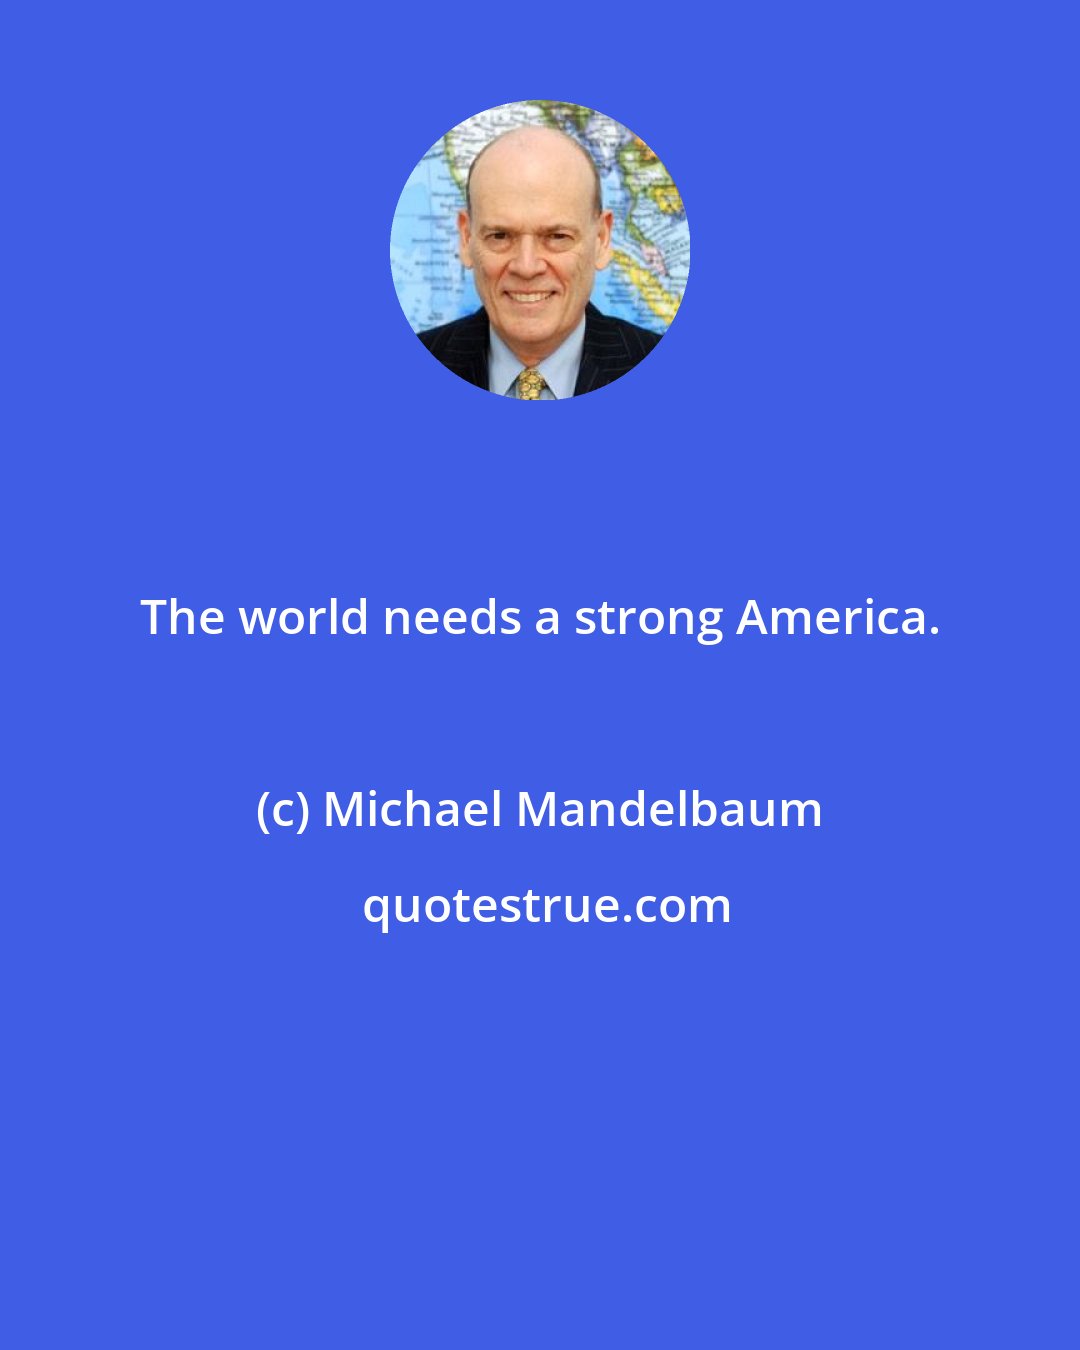 Michael Mandelbaum: The world needs a strong America.